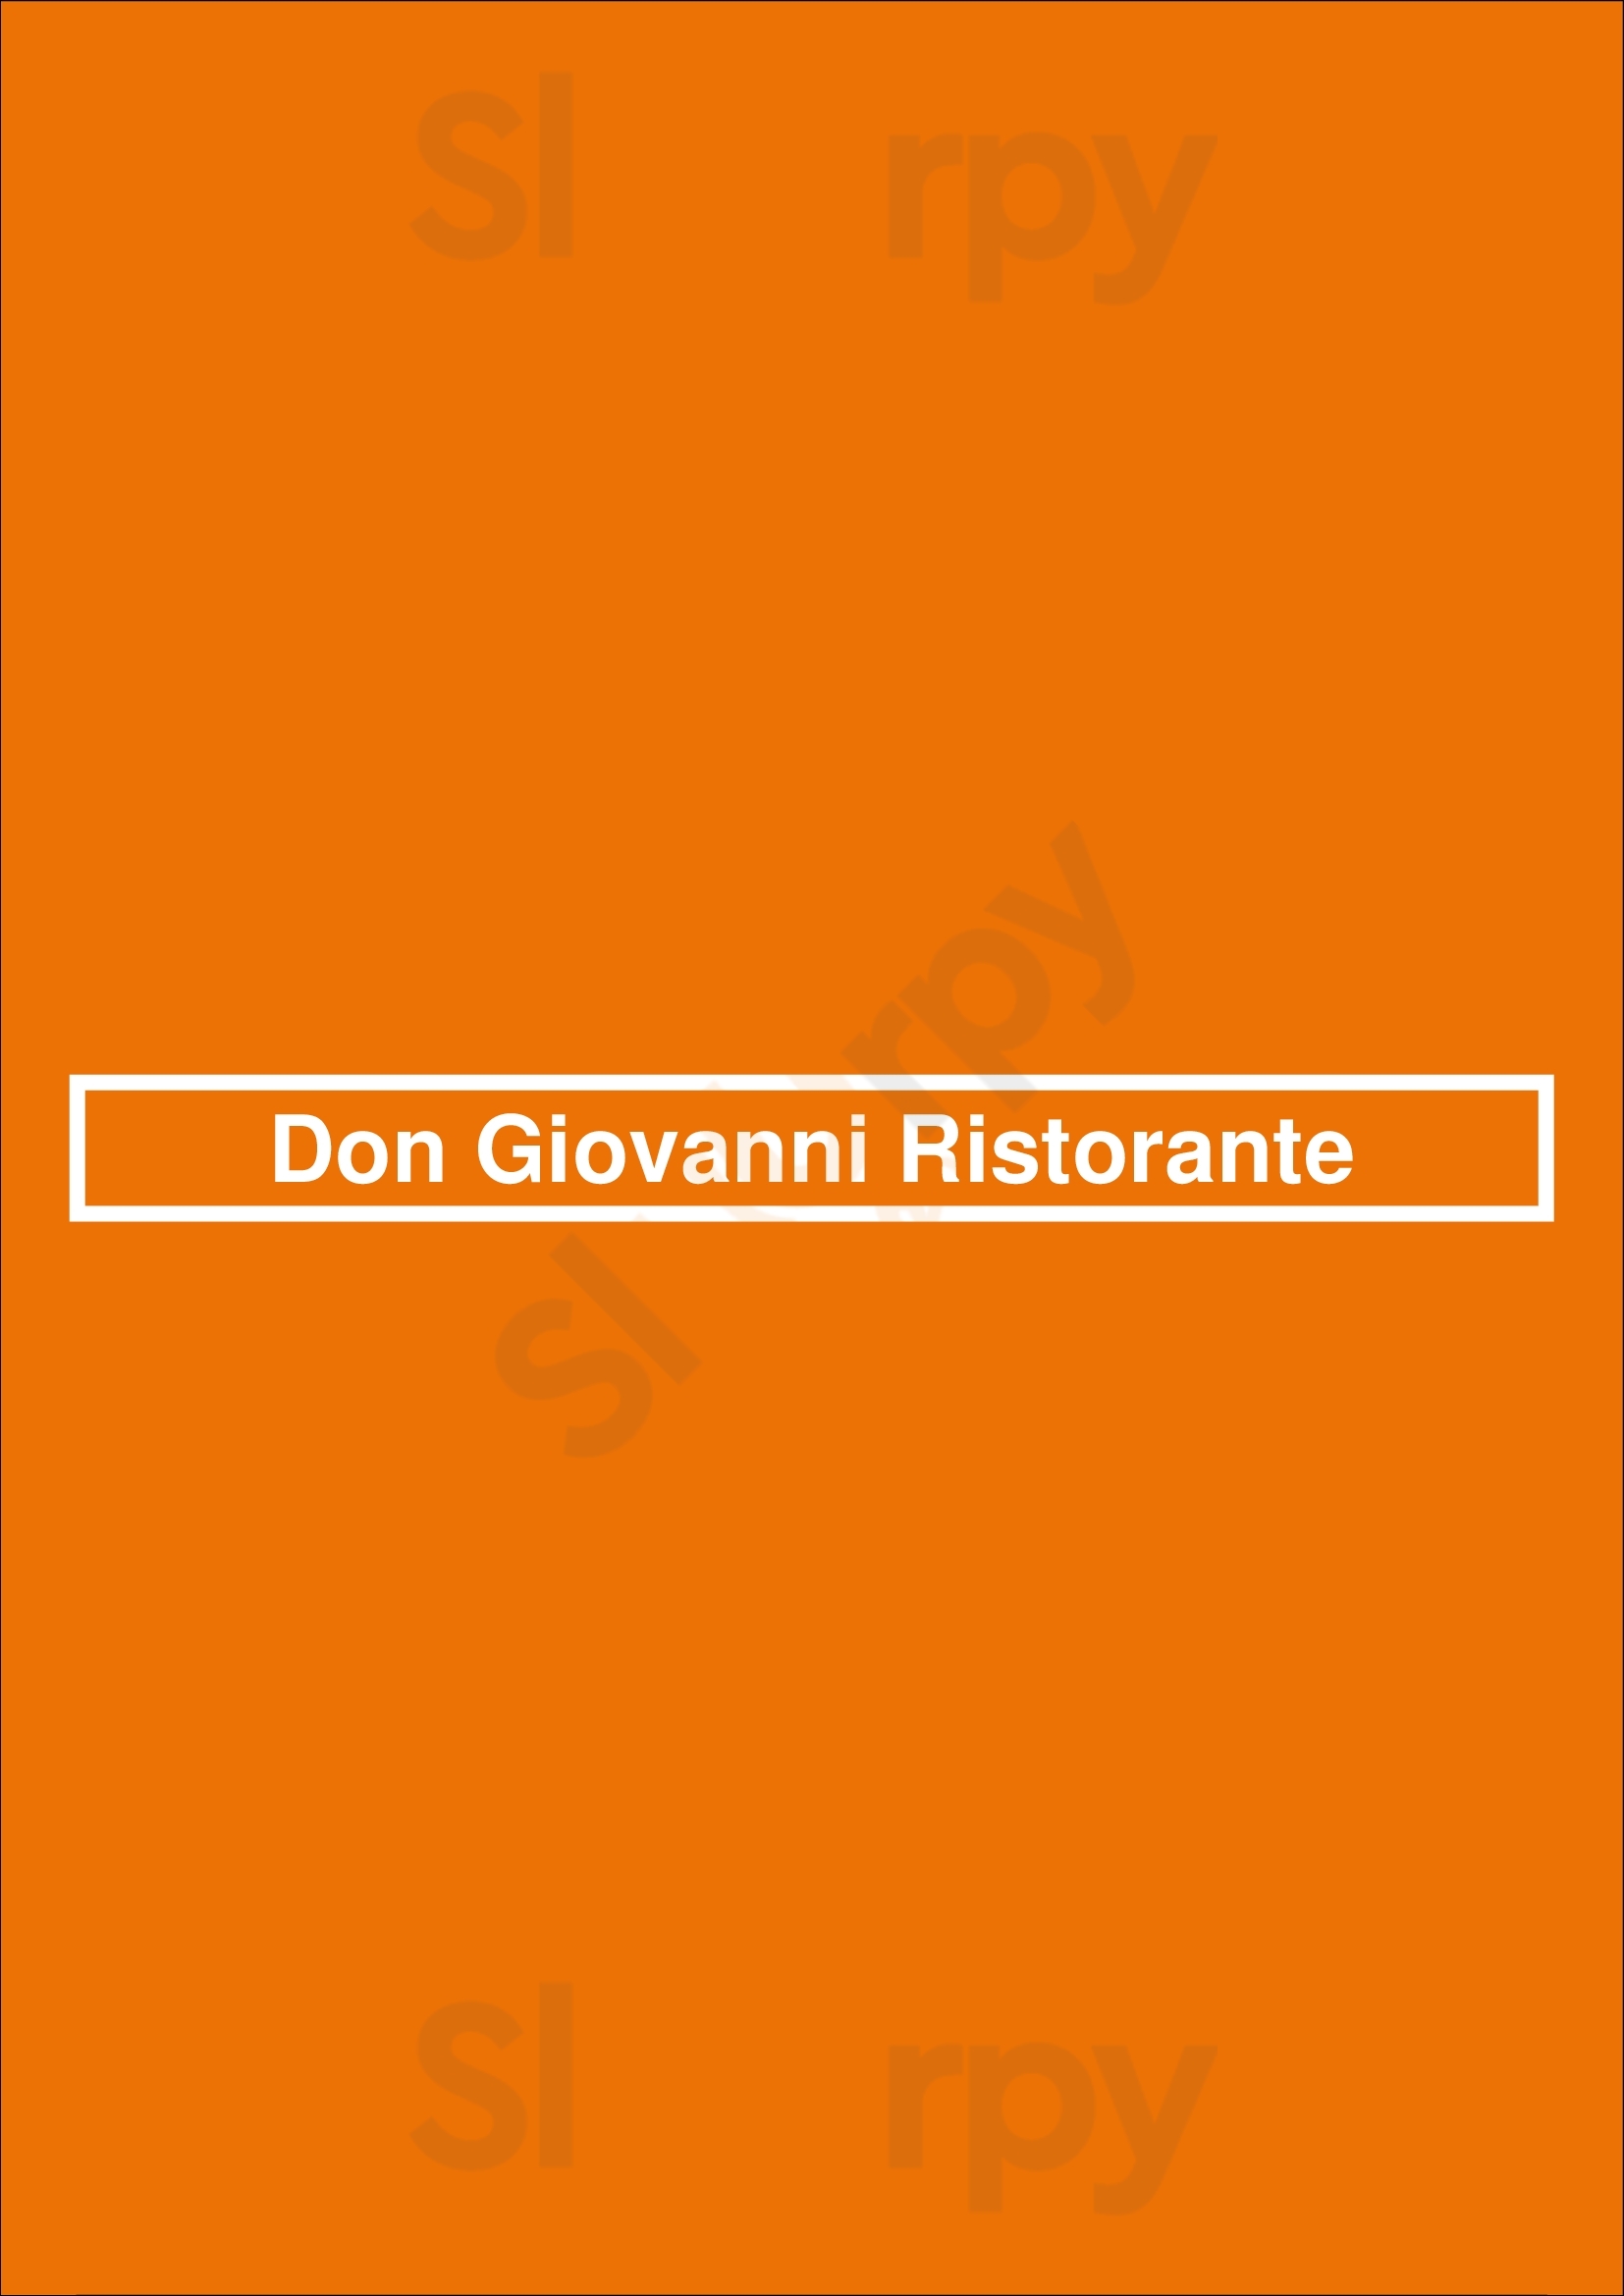 Don Giovanni Ristorante New York City Menu - 1